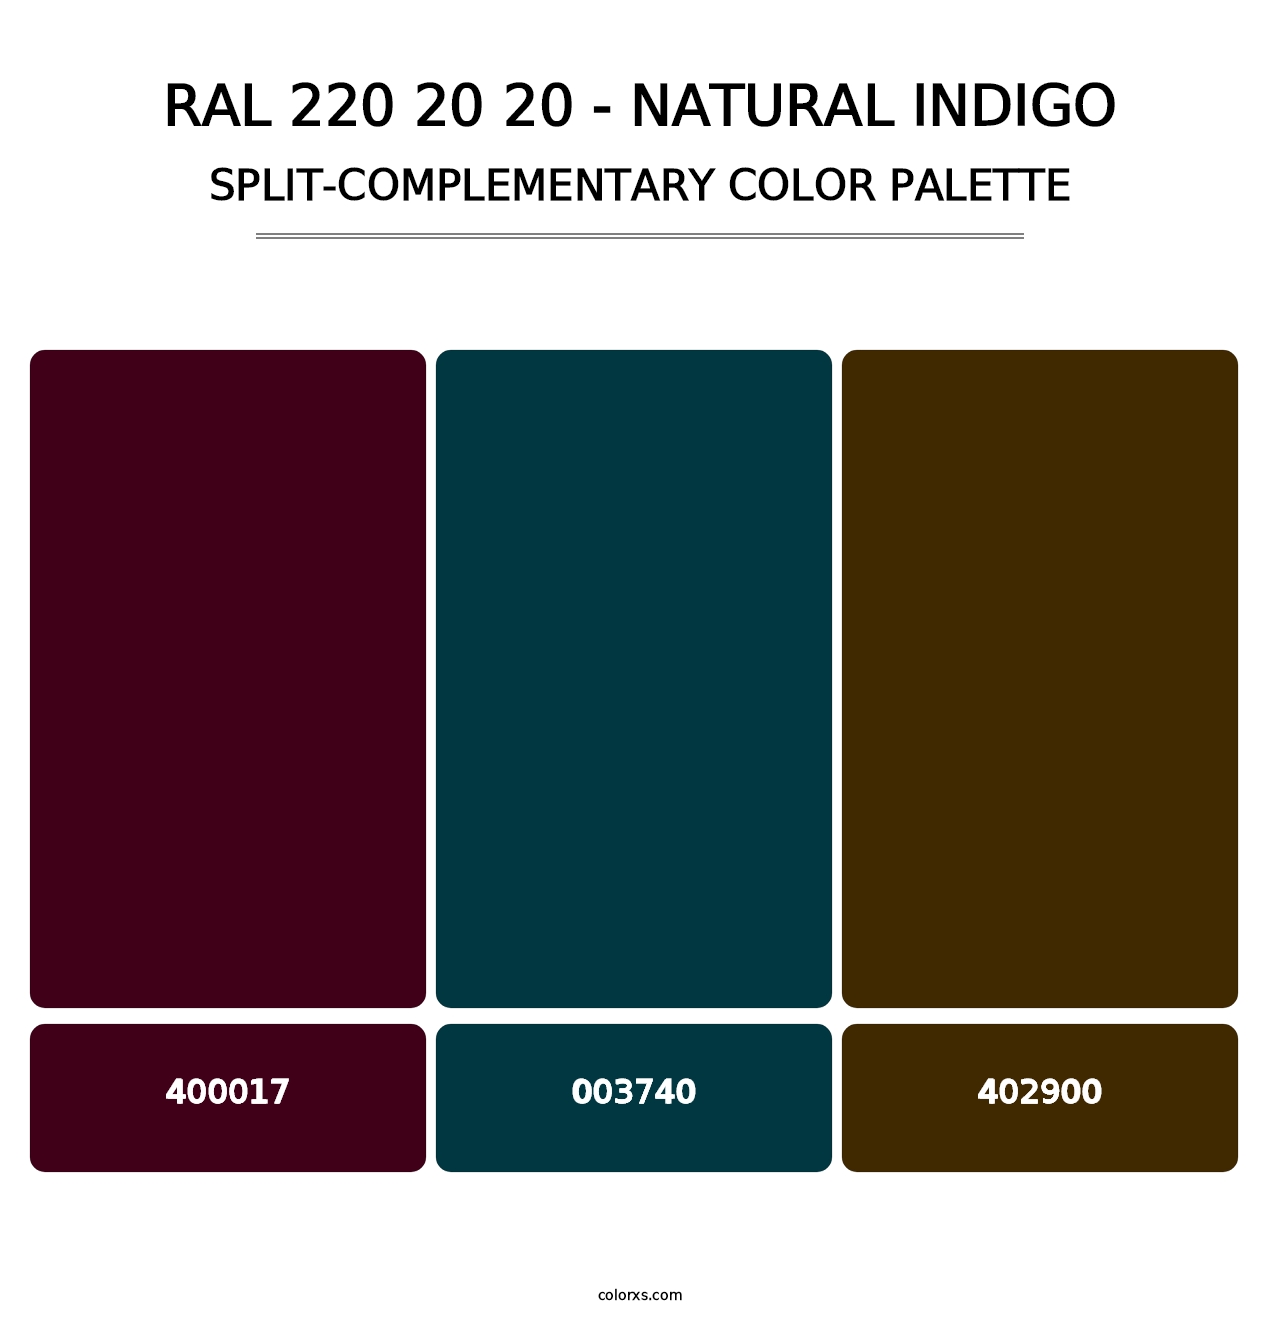 RAL 220 20 20 - Natural Indigo - Split-Complementary Color Palette